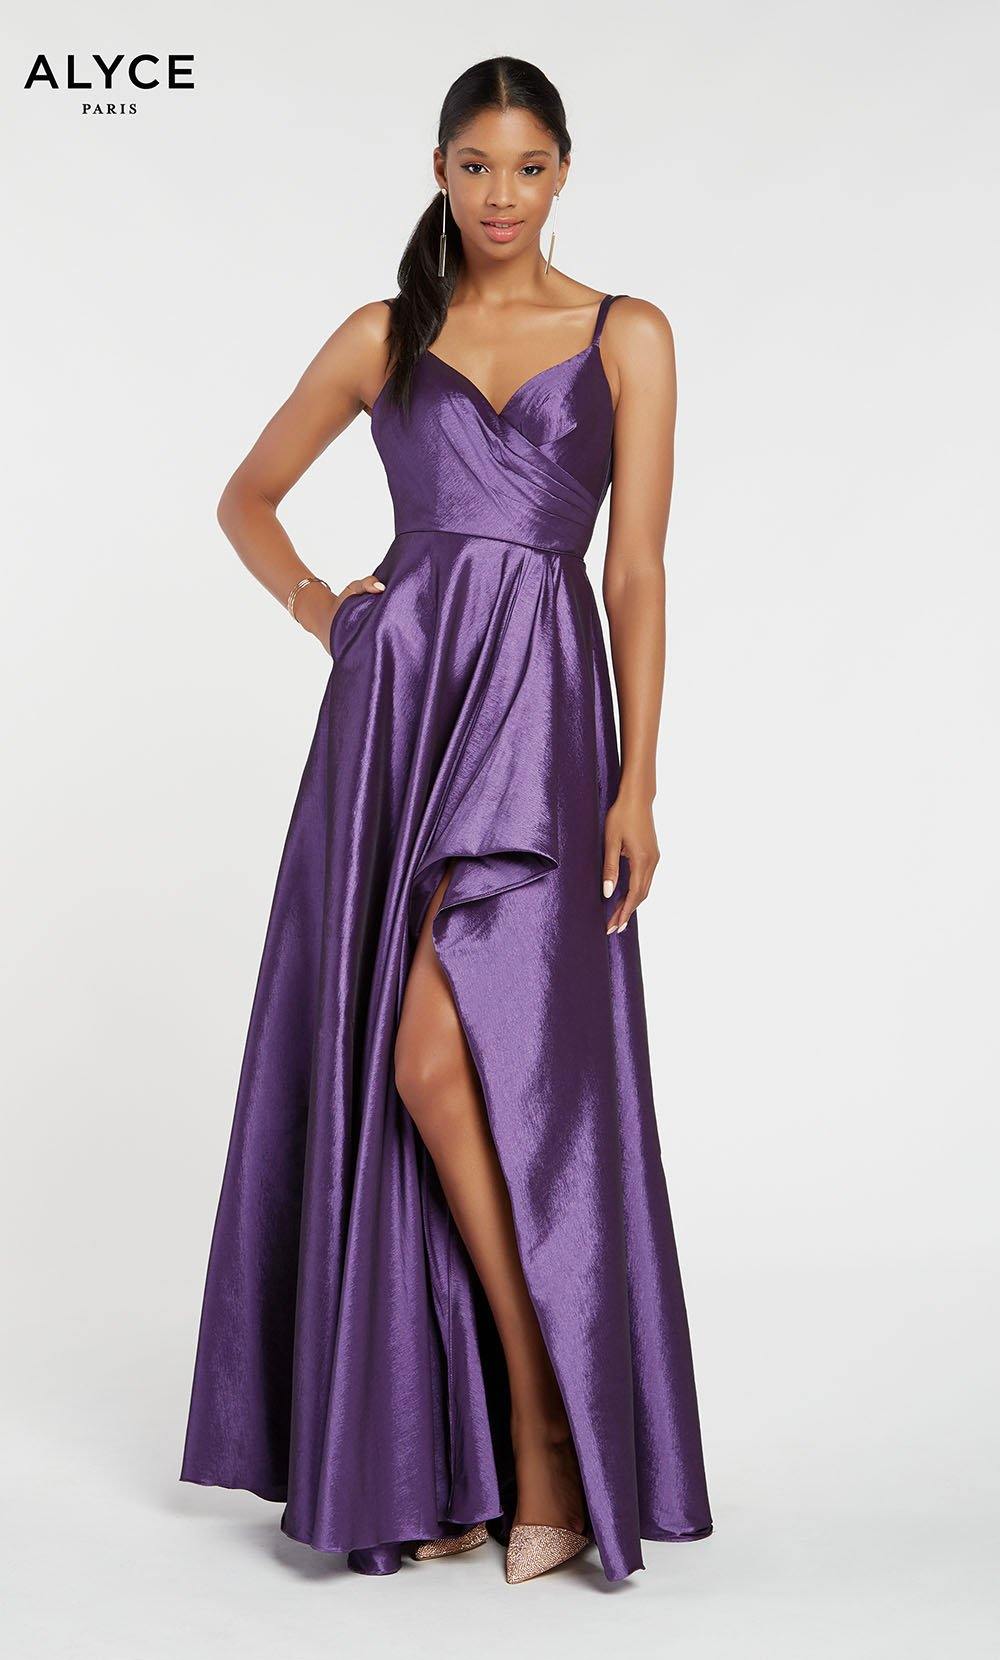 Plum high low prom dress with a sweetheart neckline, pockets, and a stretch taffeta fabrication. SWATCH_60094__PLUM